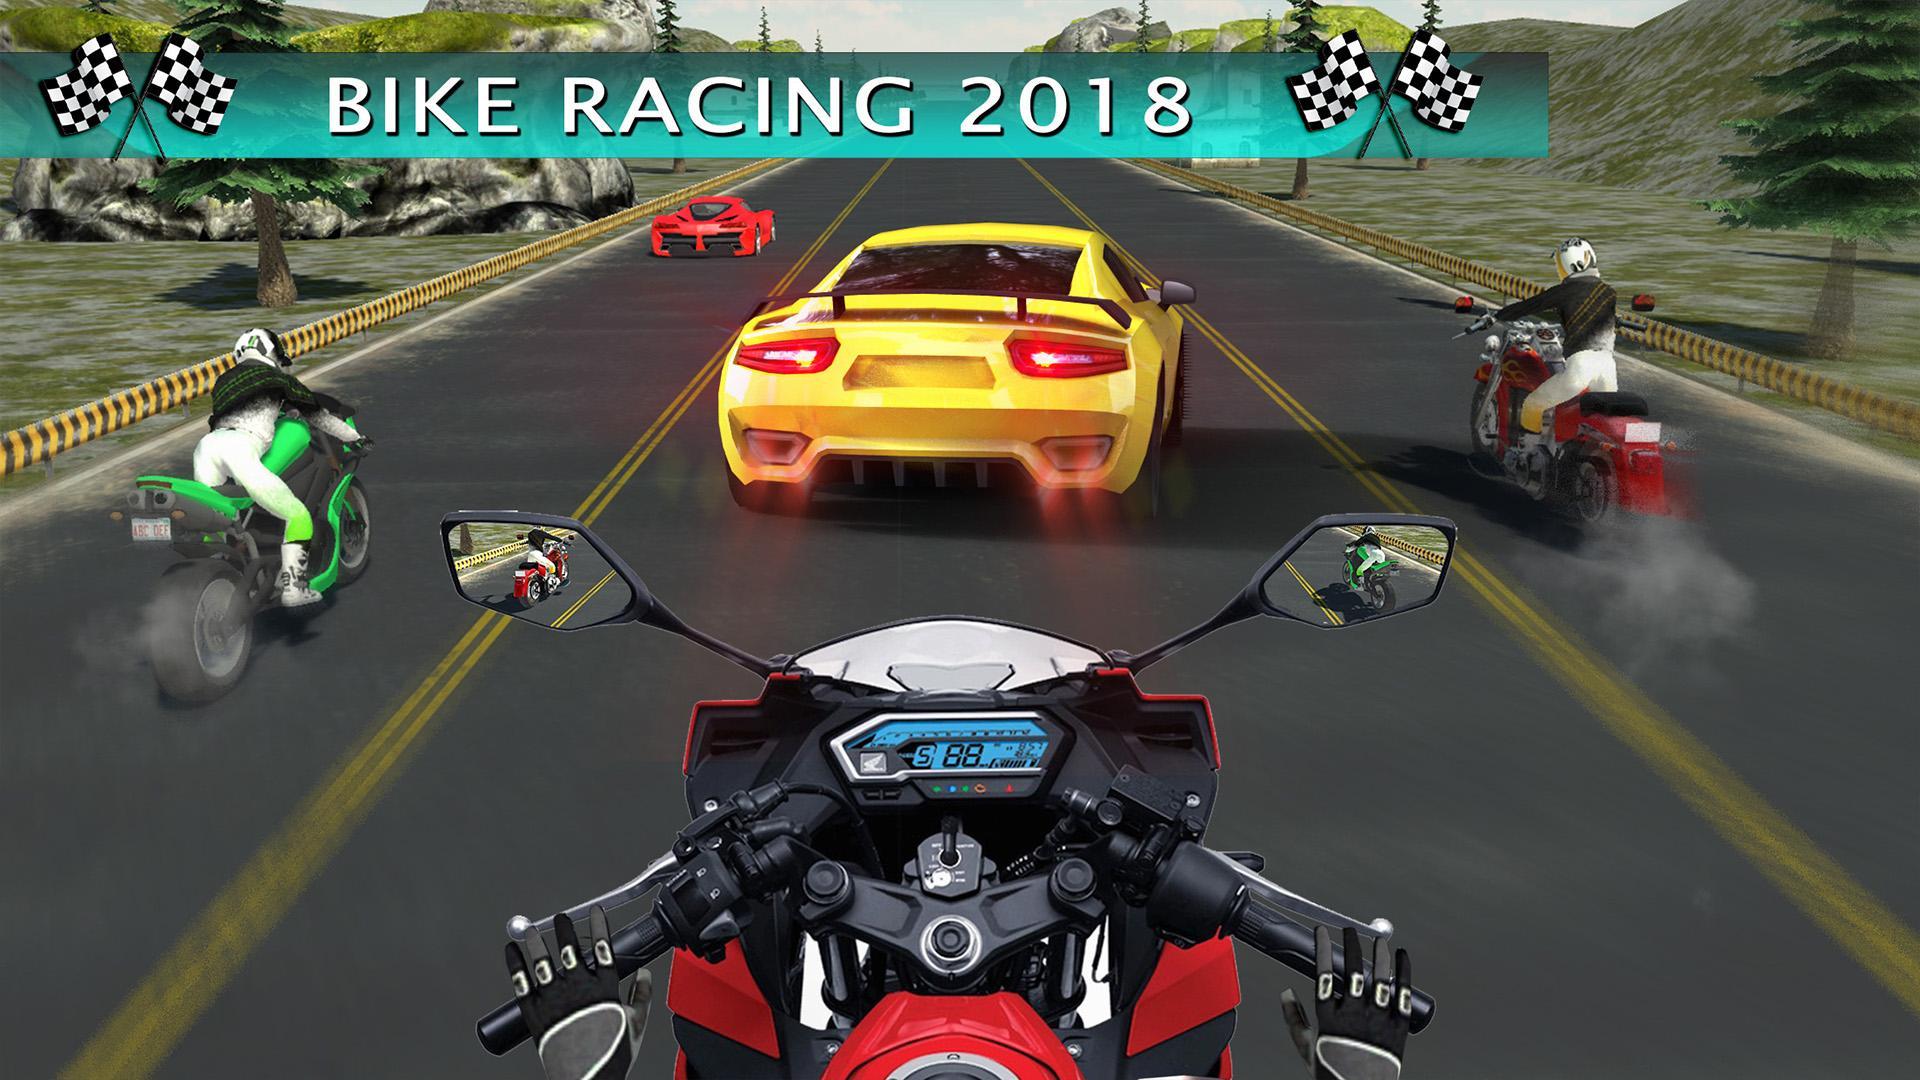 Bike race racing game